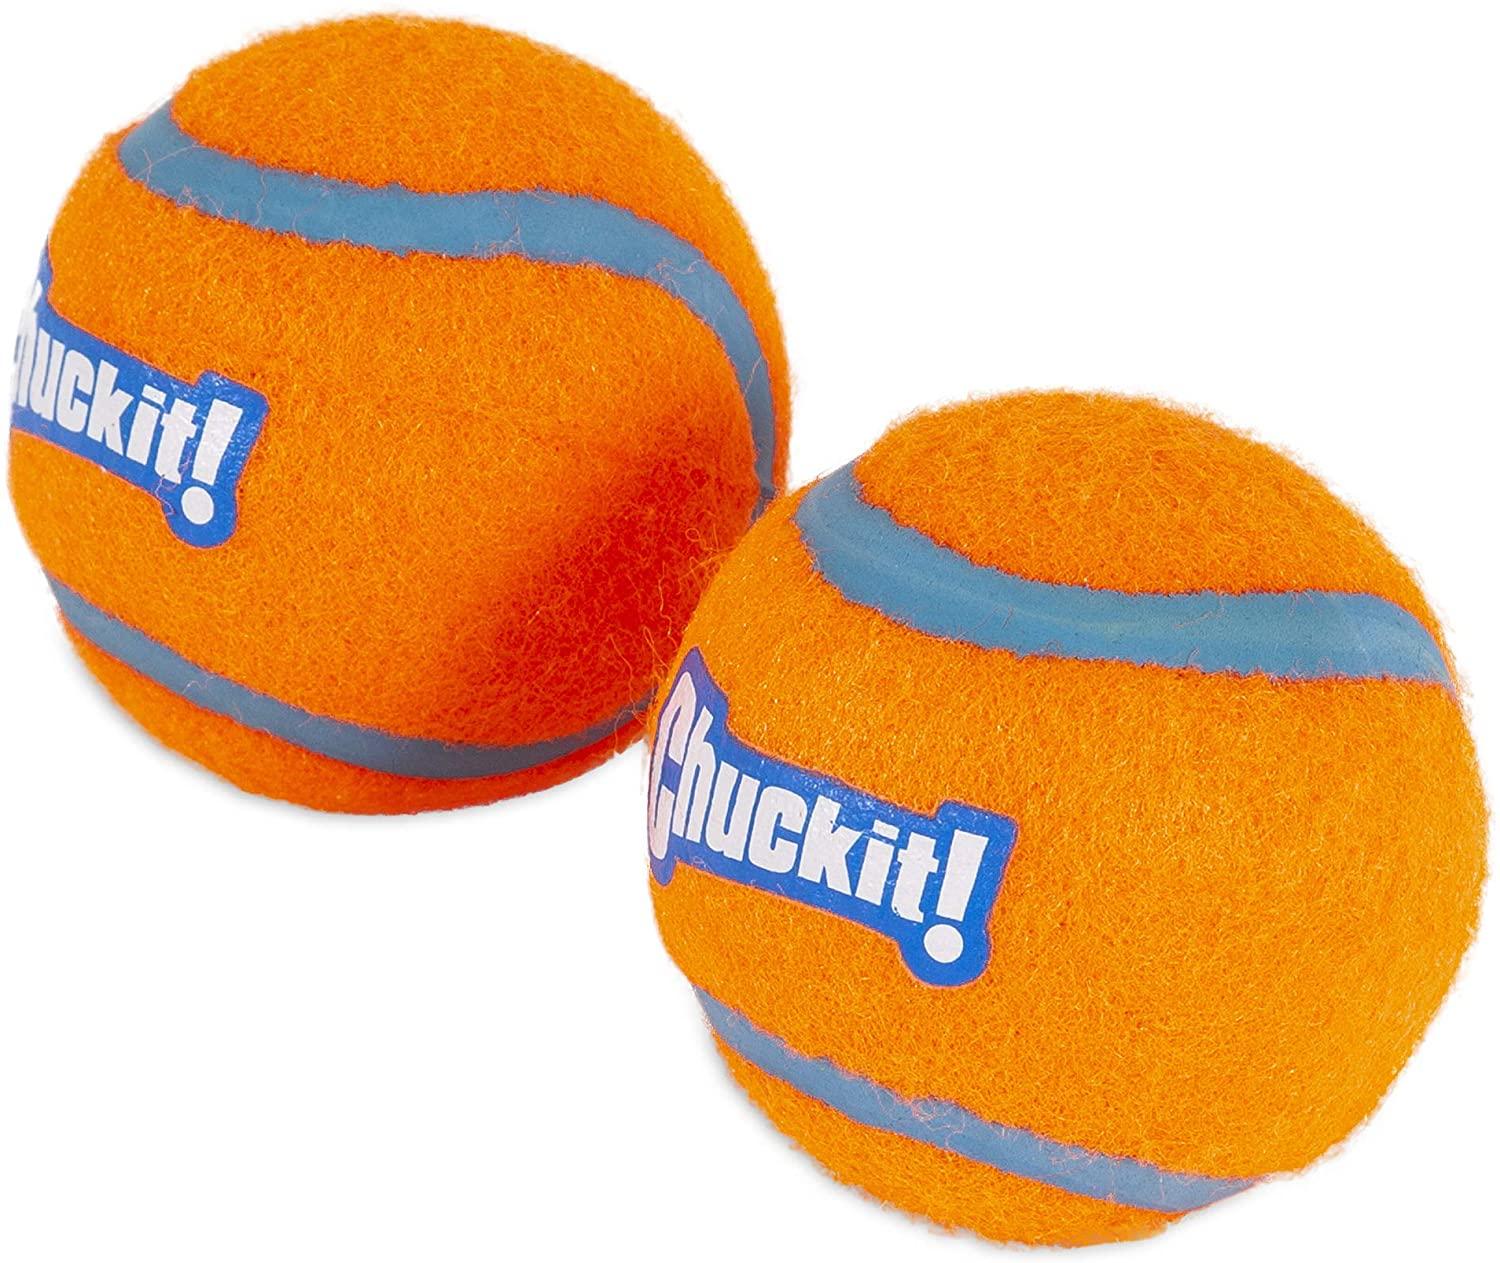 2 Chuckit Medium Dog Toy Tennis Balls for $1.74